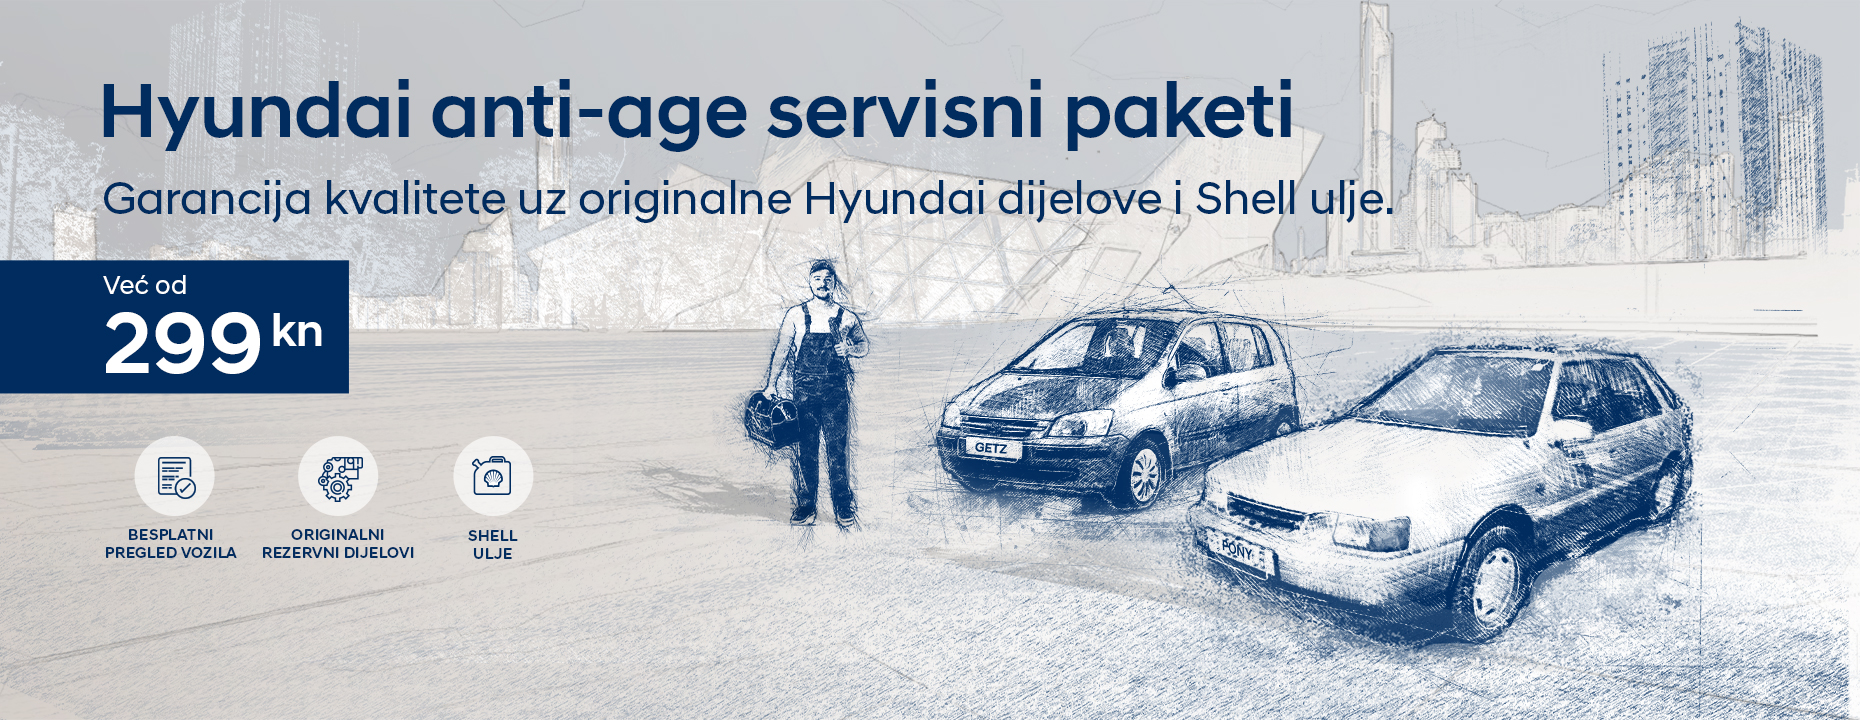 Hyundai anti-age servisni paketi